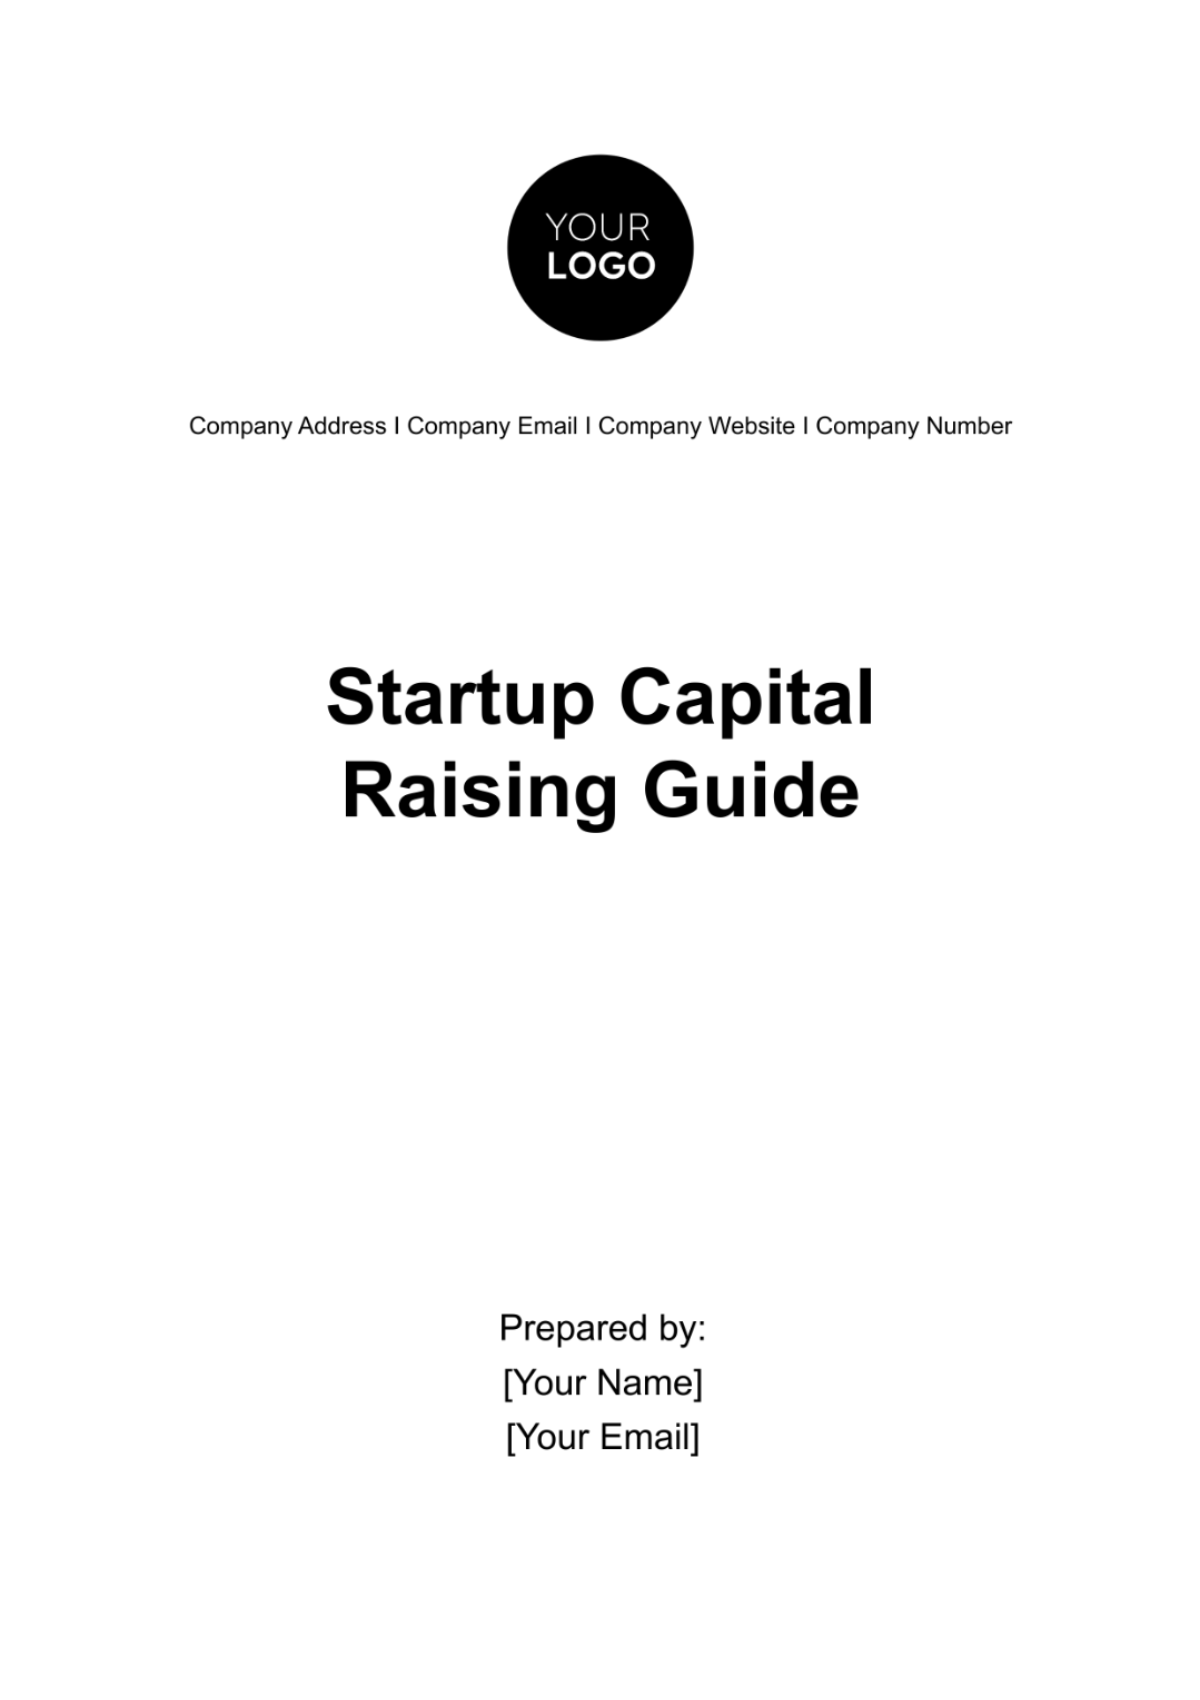 Startup Capital Raising Guide Template